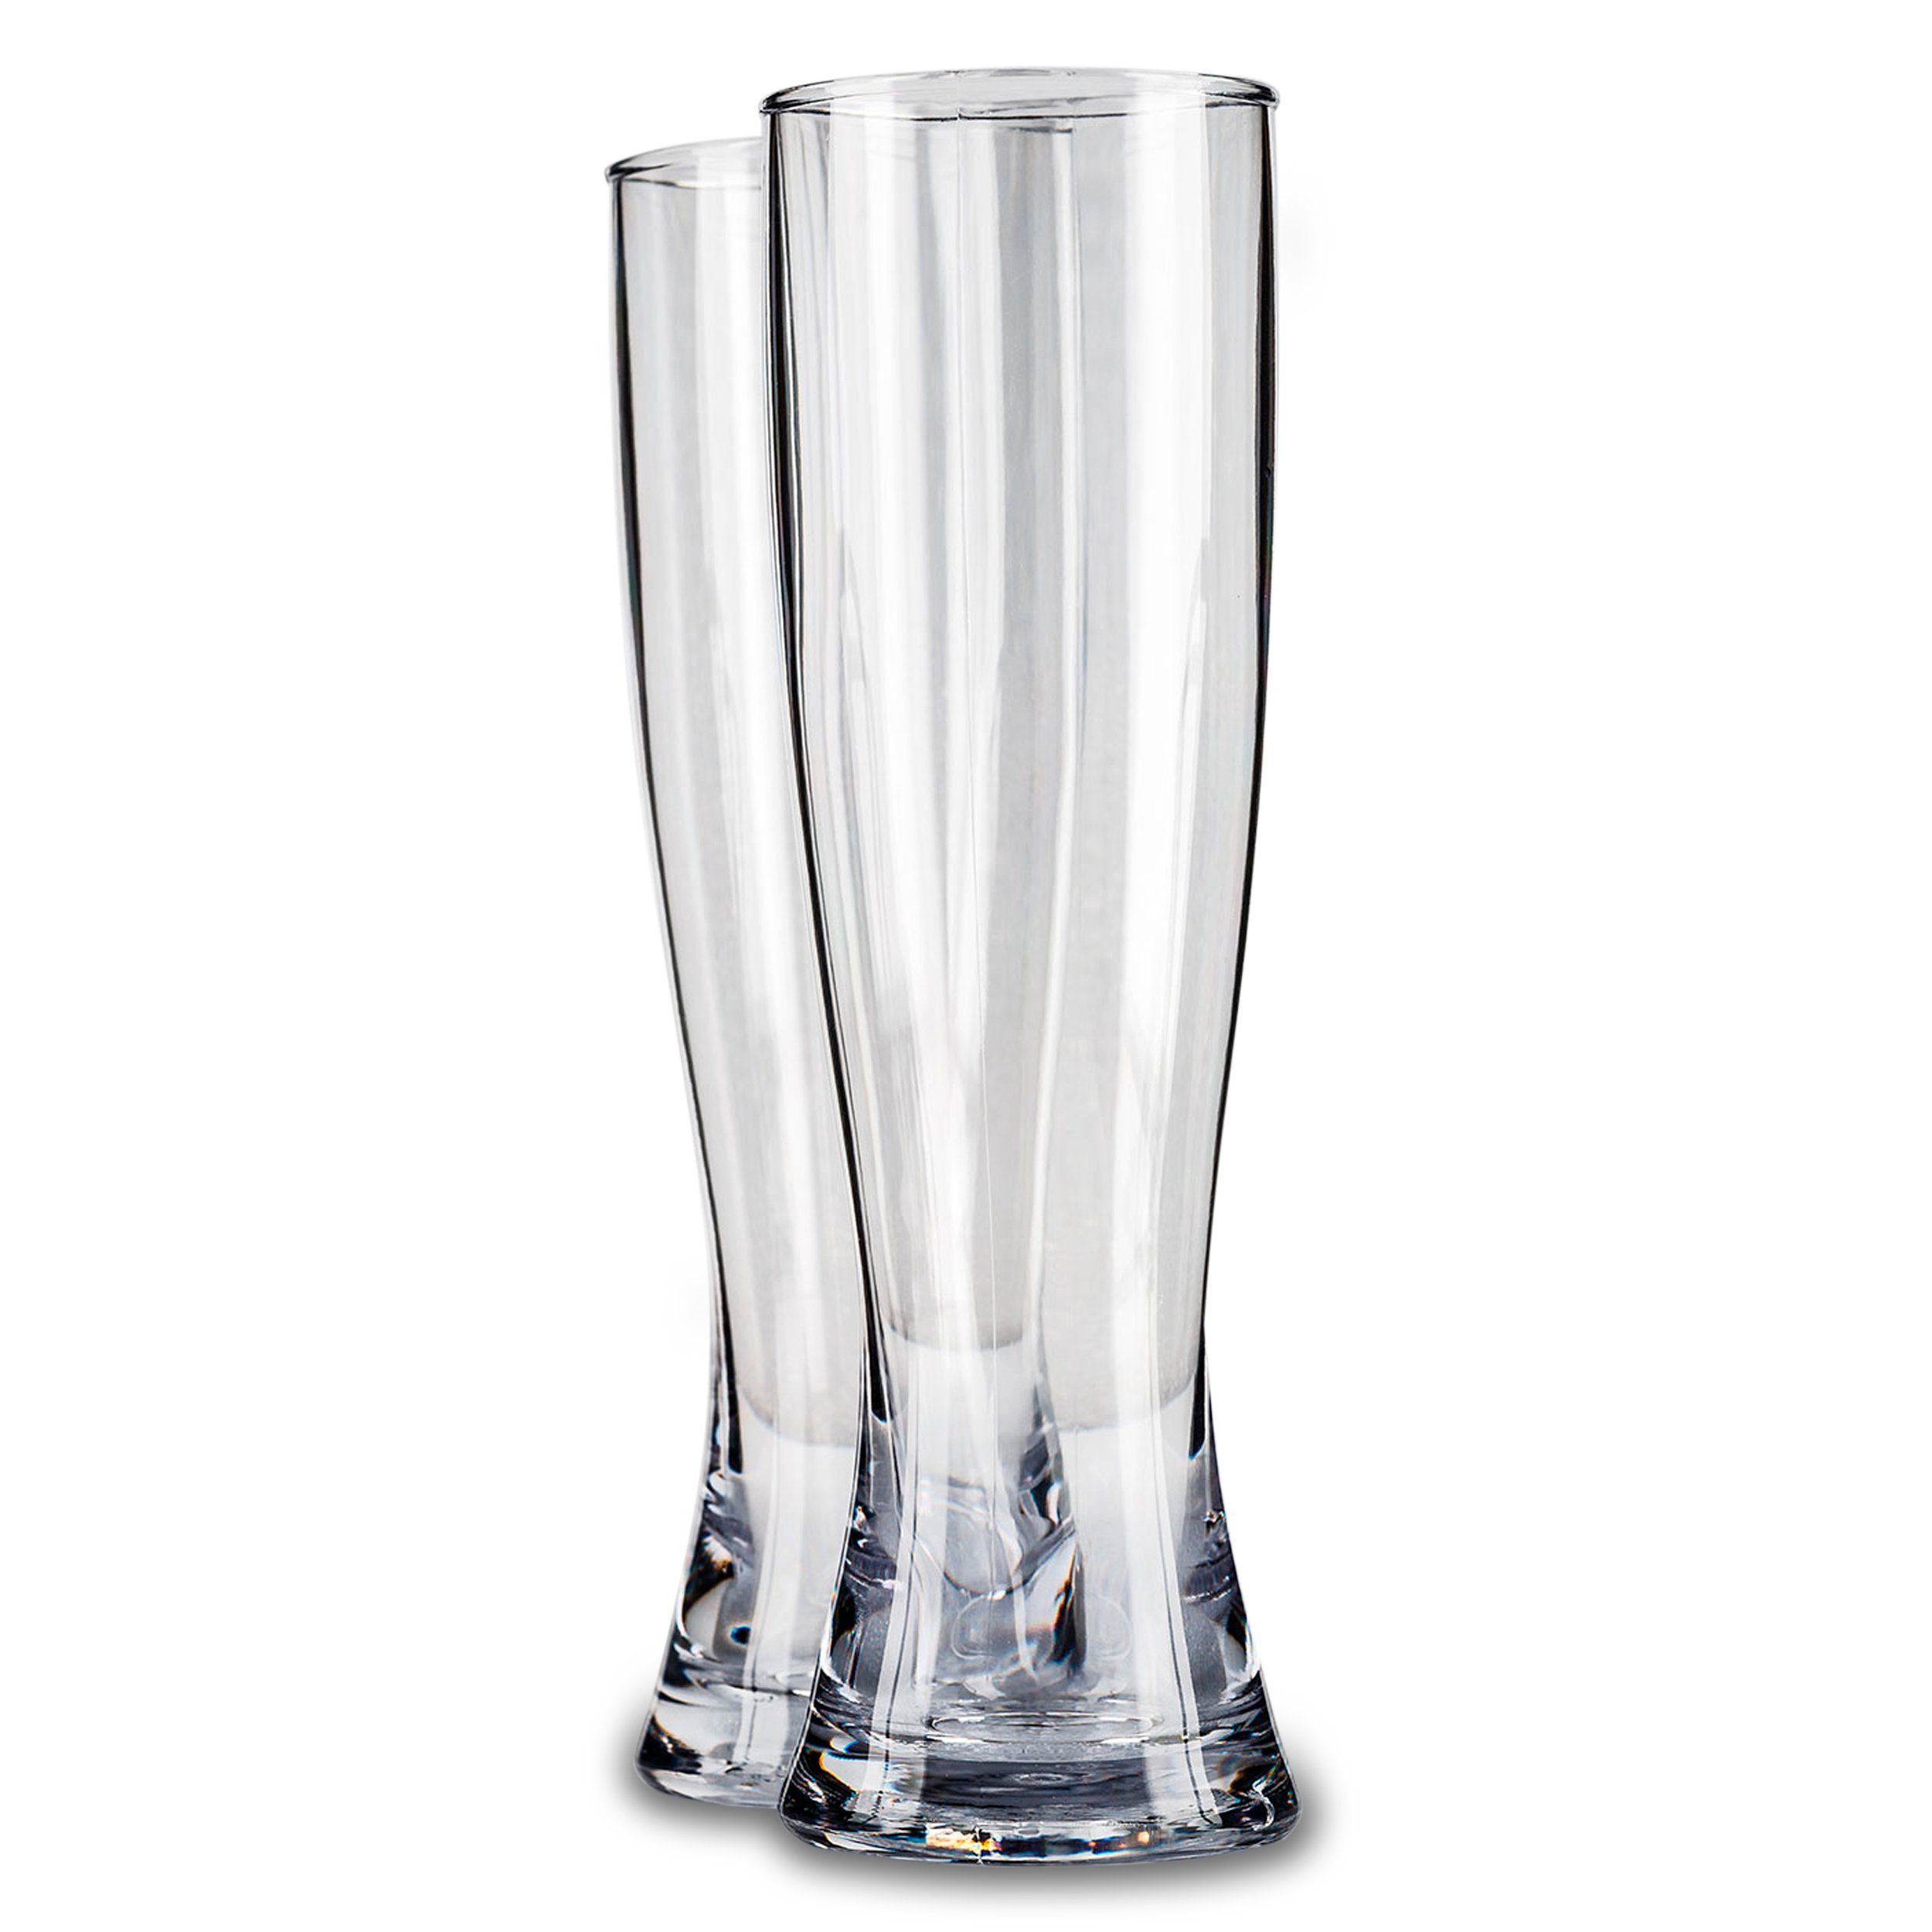 Adoma GmbH Becher 2er-Set Weizenbierglas Elegante 0,5 L - Kunststoff, Kunststoff